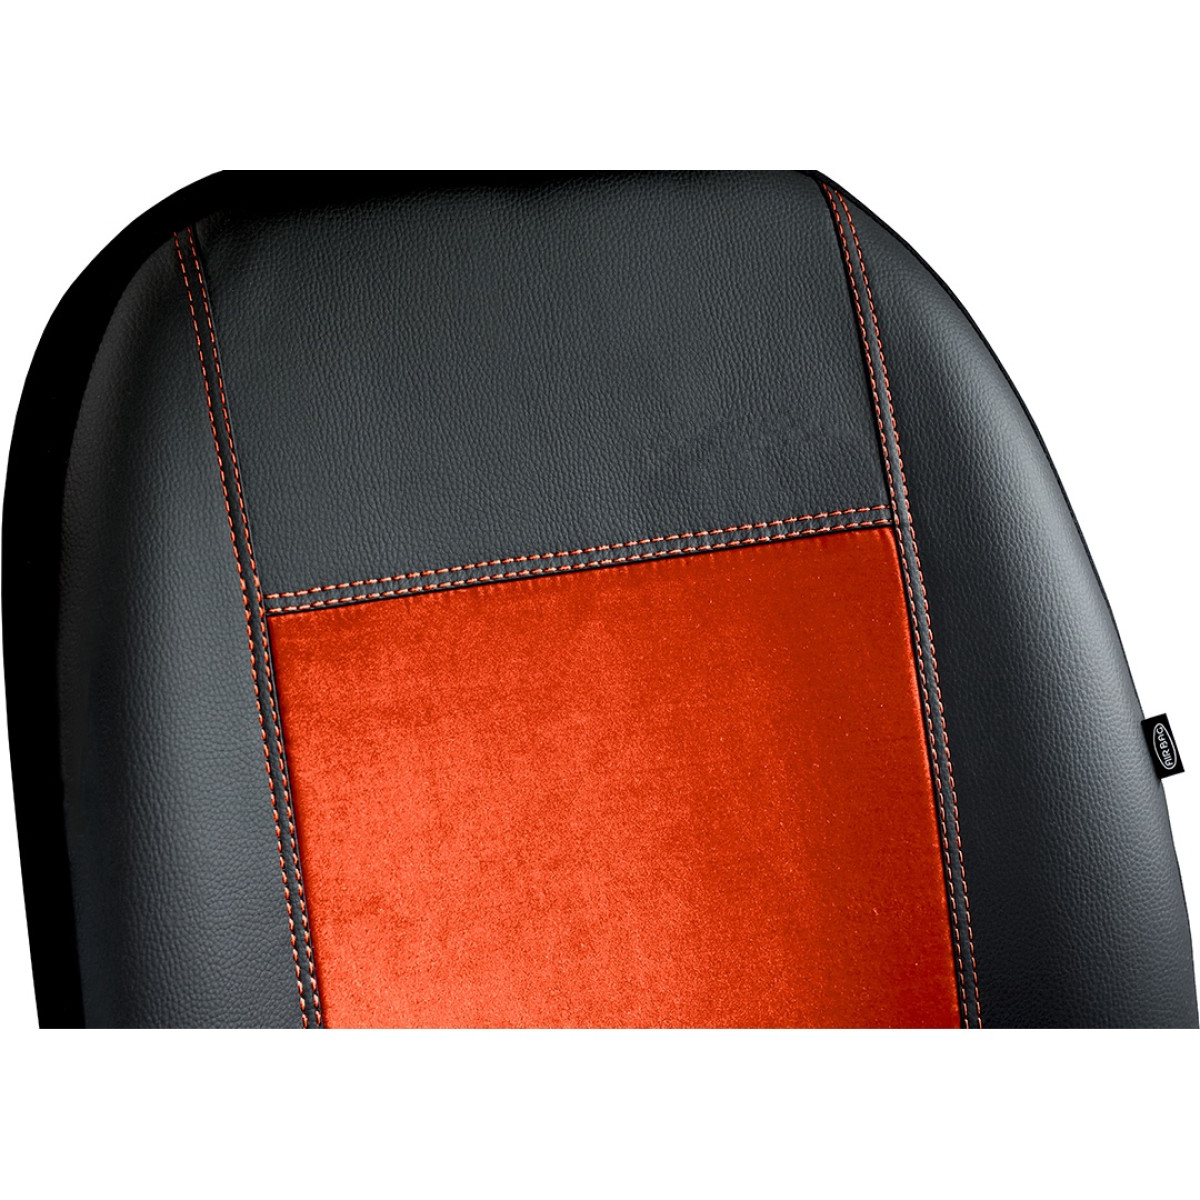 EXCLUSIVE seat covers (eco leather, alcantara) Opel Mokka X